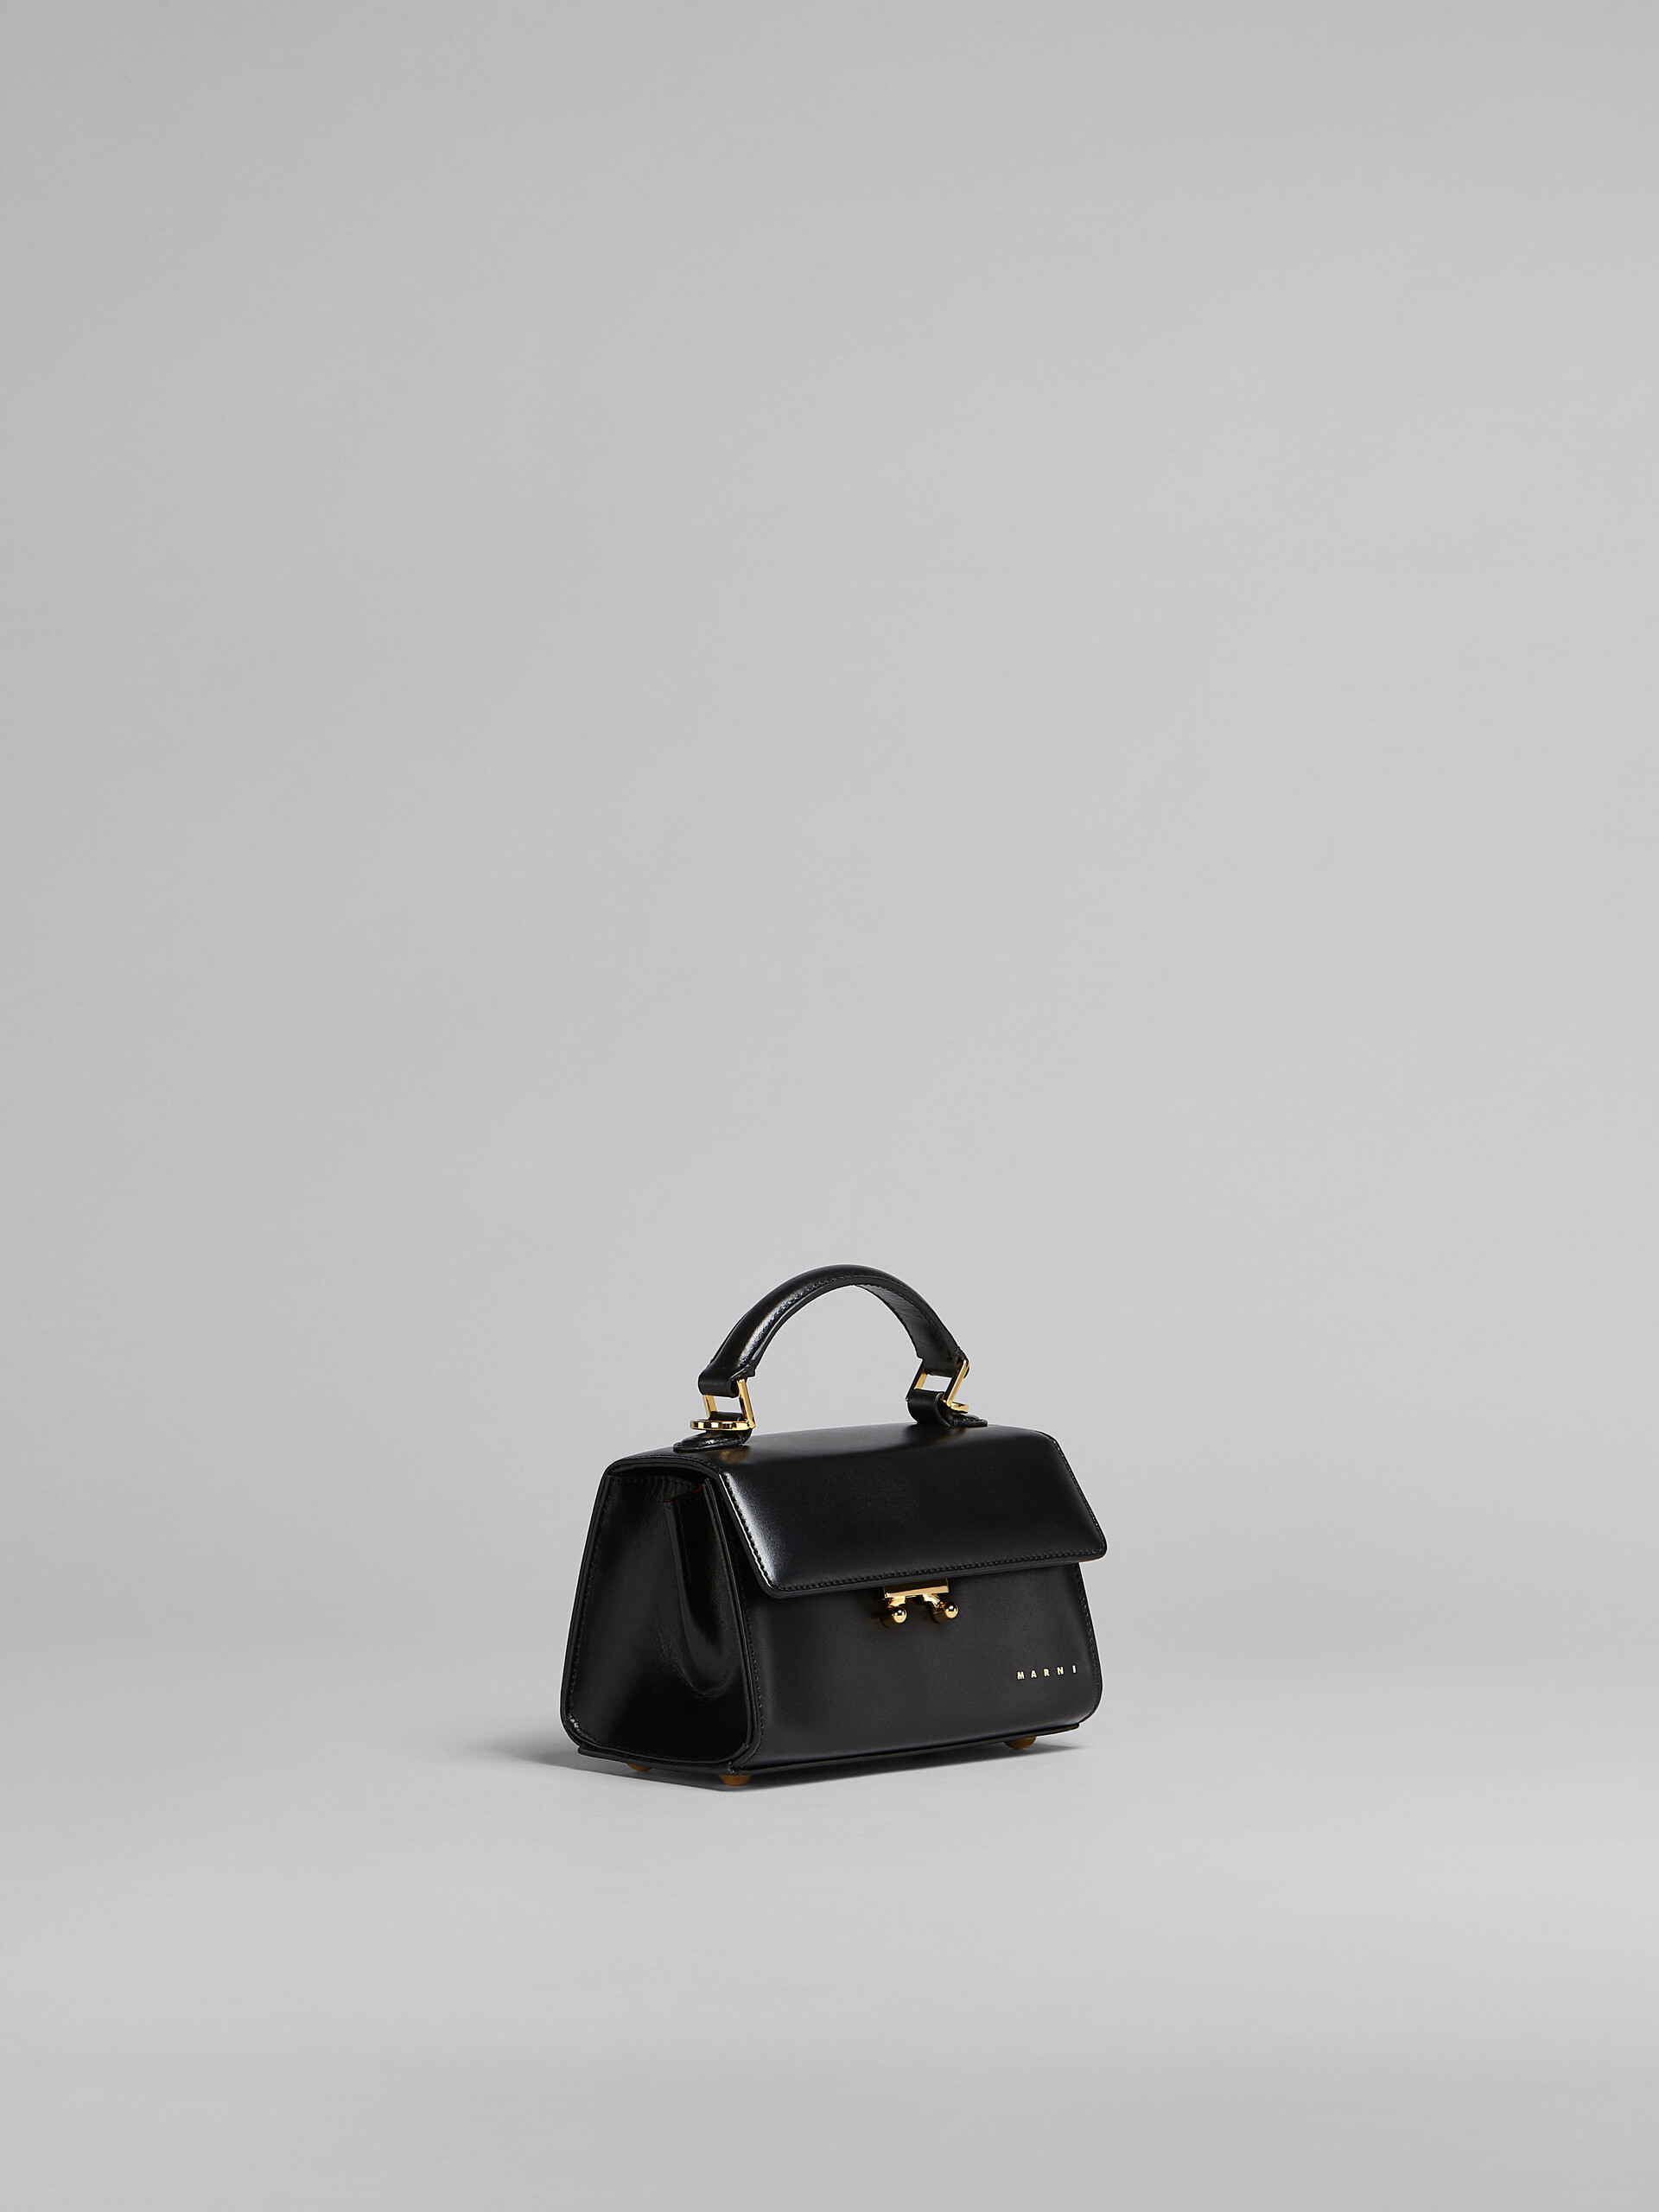 Relativity Mini Bag in black leather - Handbags - Image 6